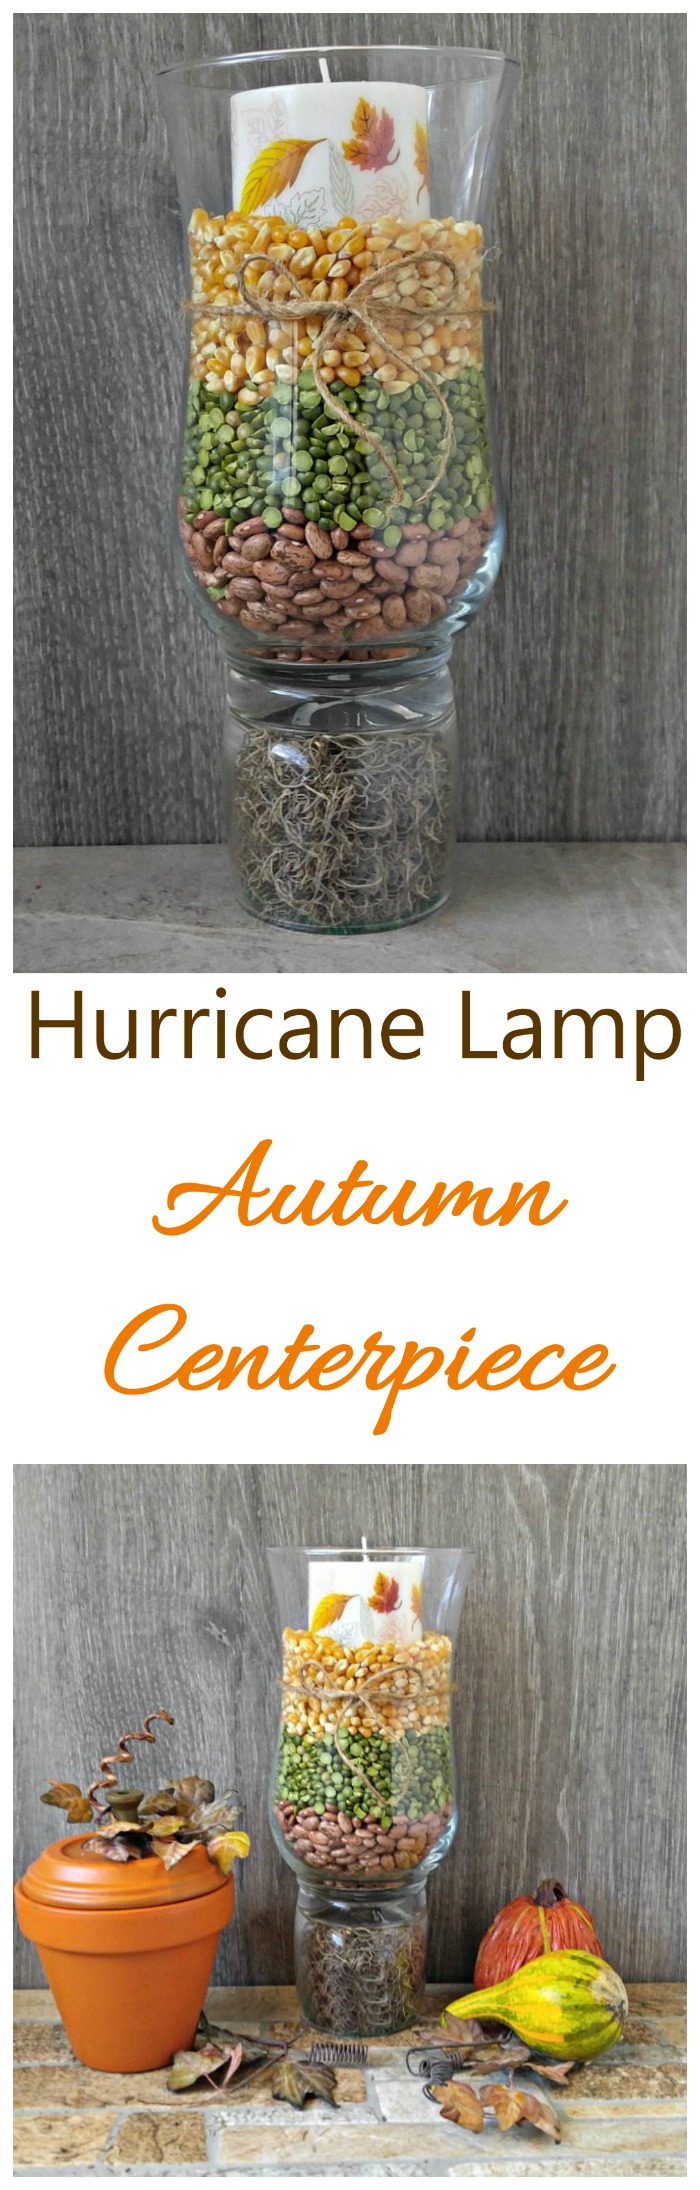 Hurricane Lamp Fall Centerpiece - Rustik efterårsborddekoration